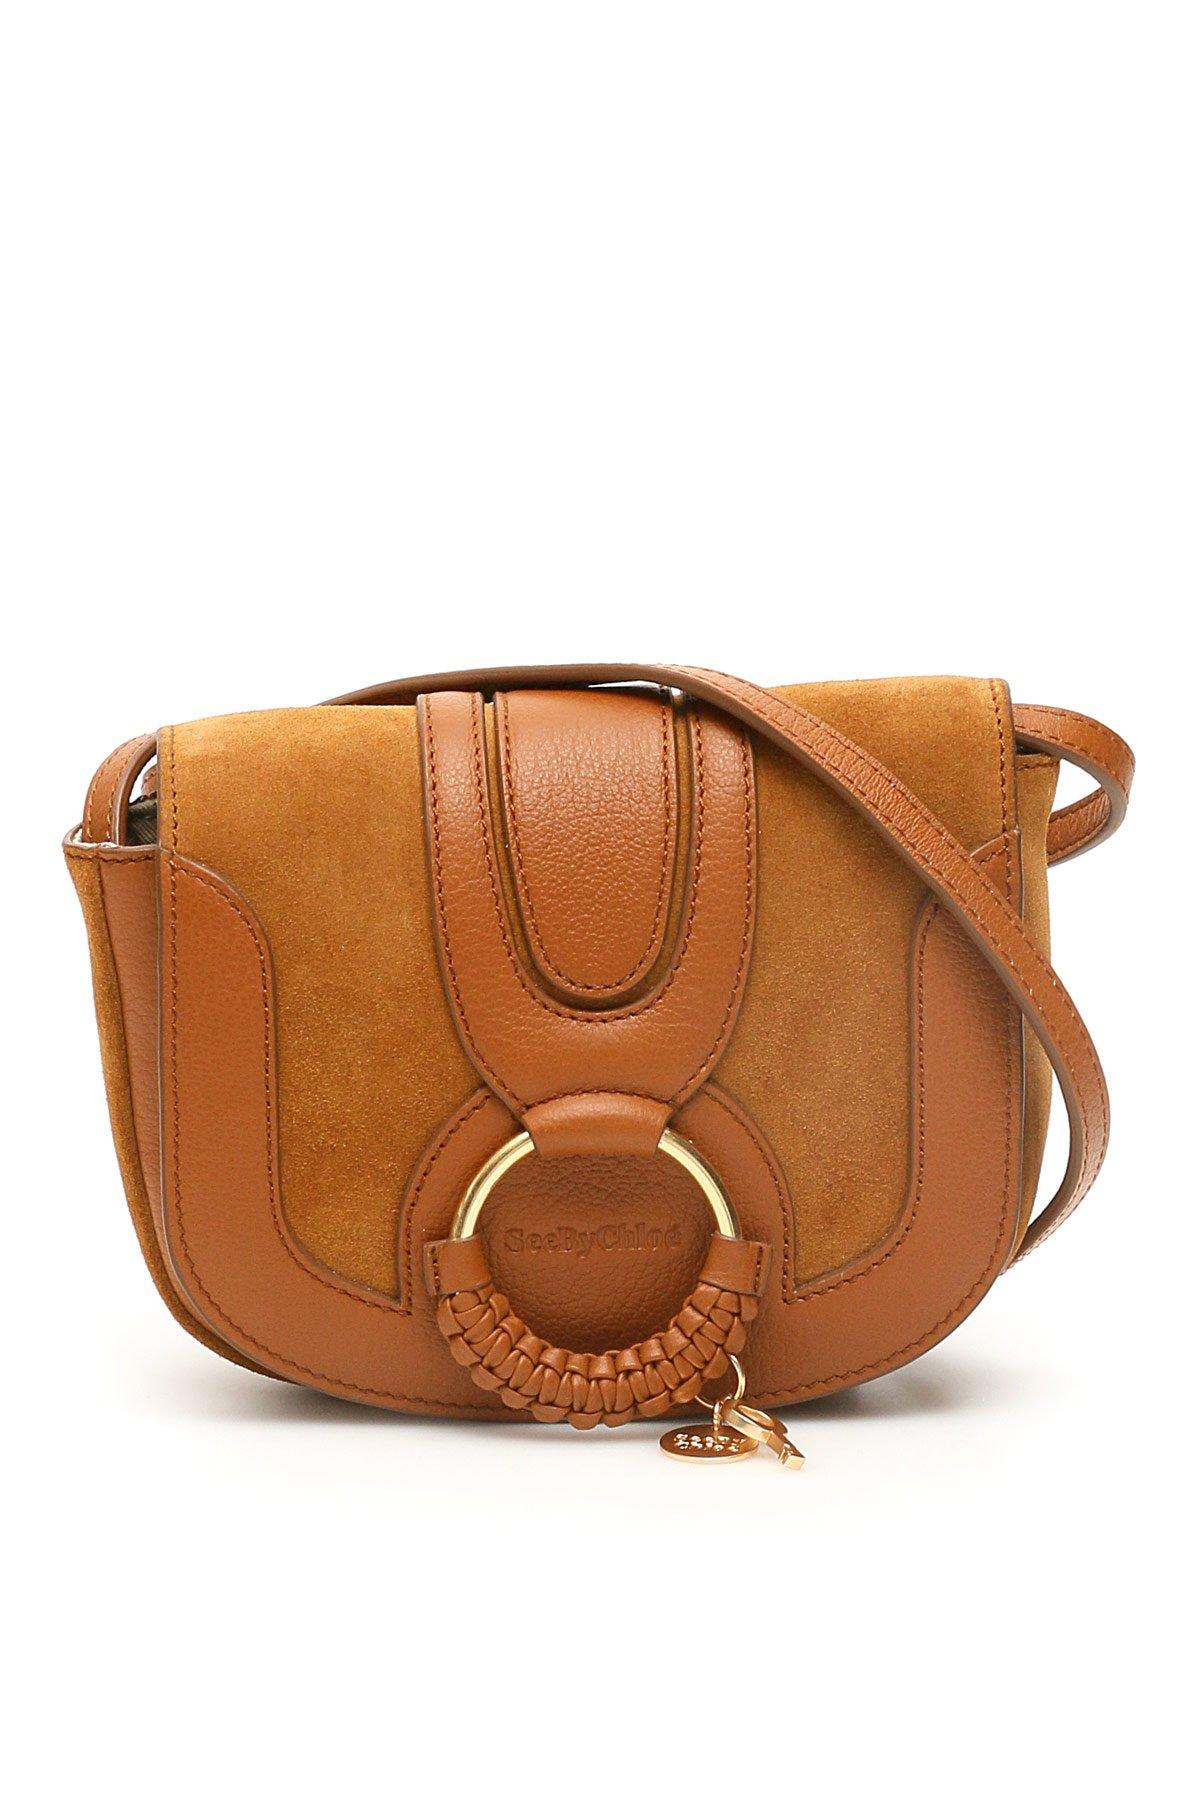 See By Chloé Leather Hana Mini Crossbody Bag in Brown - Lyst